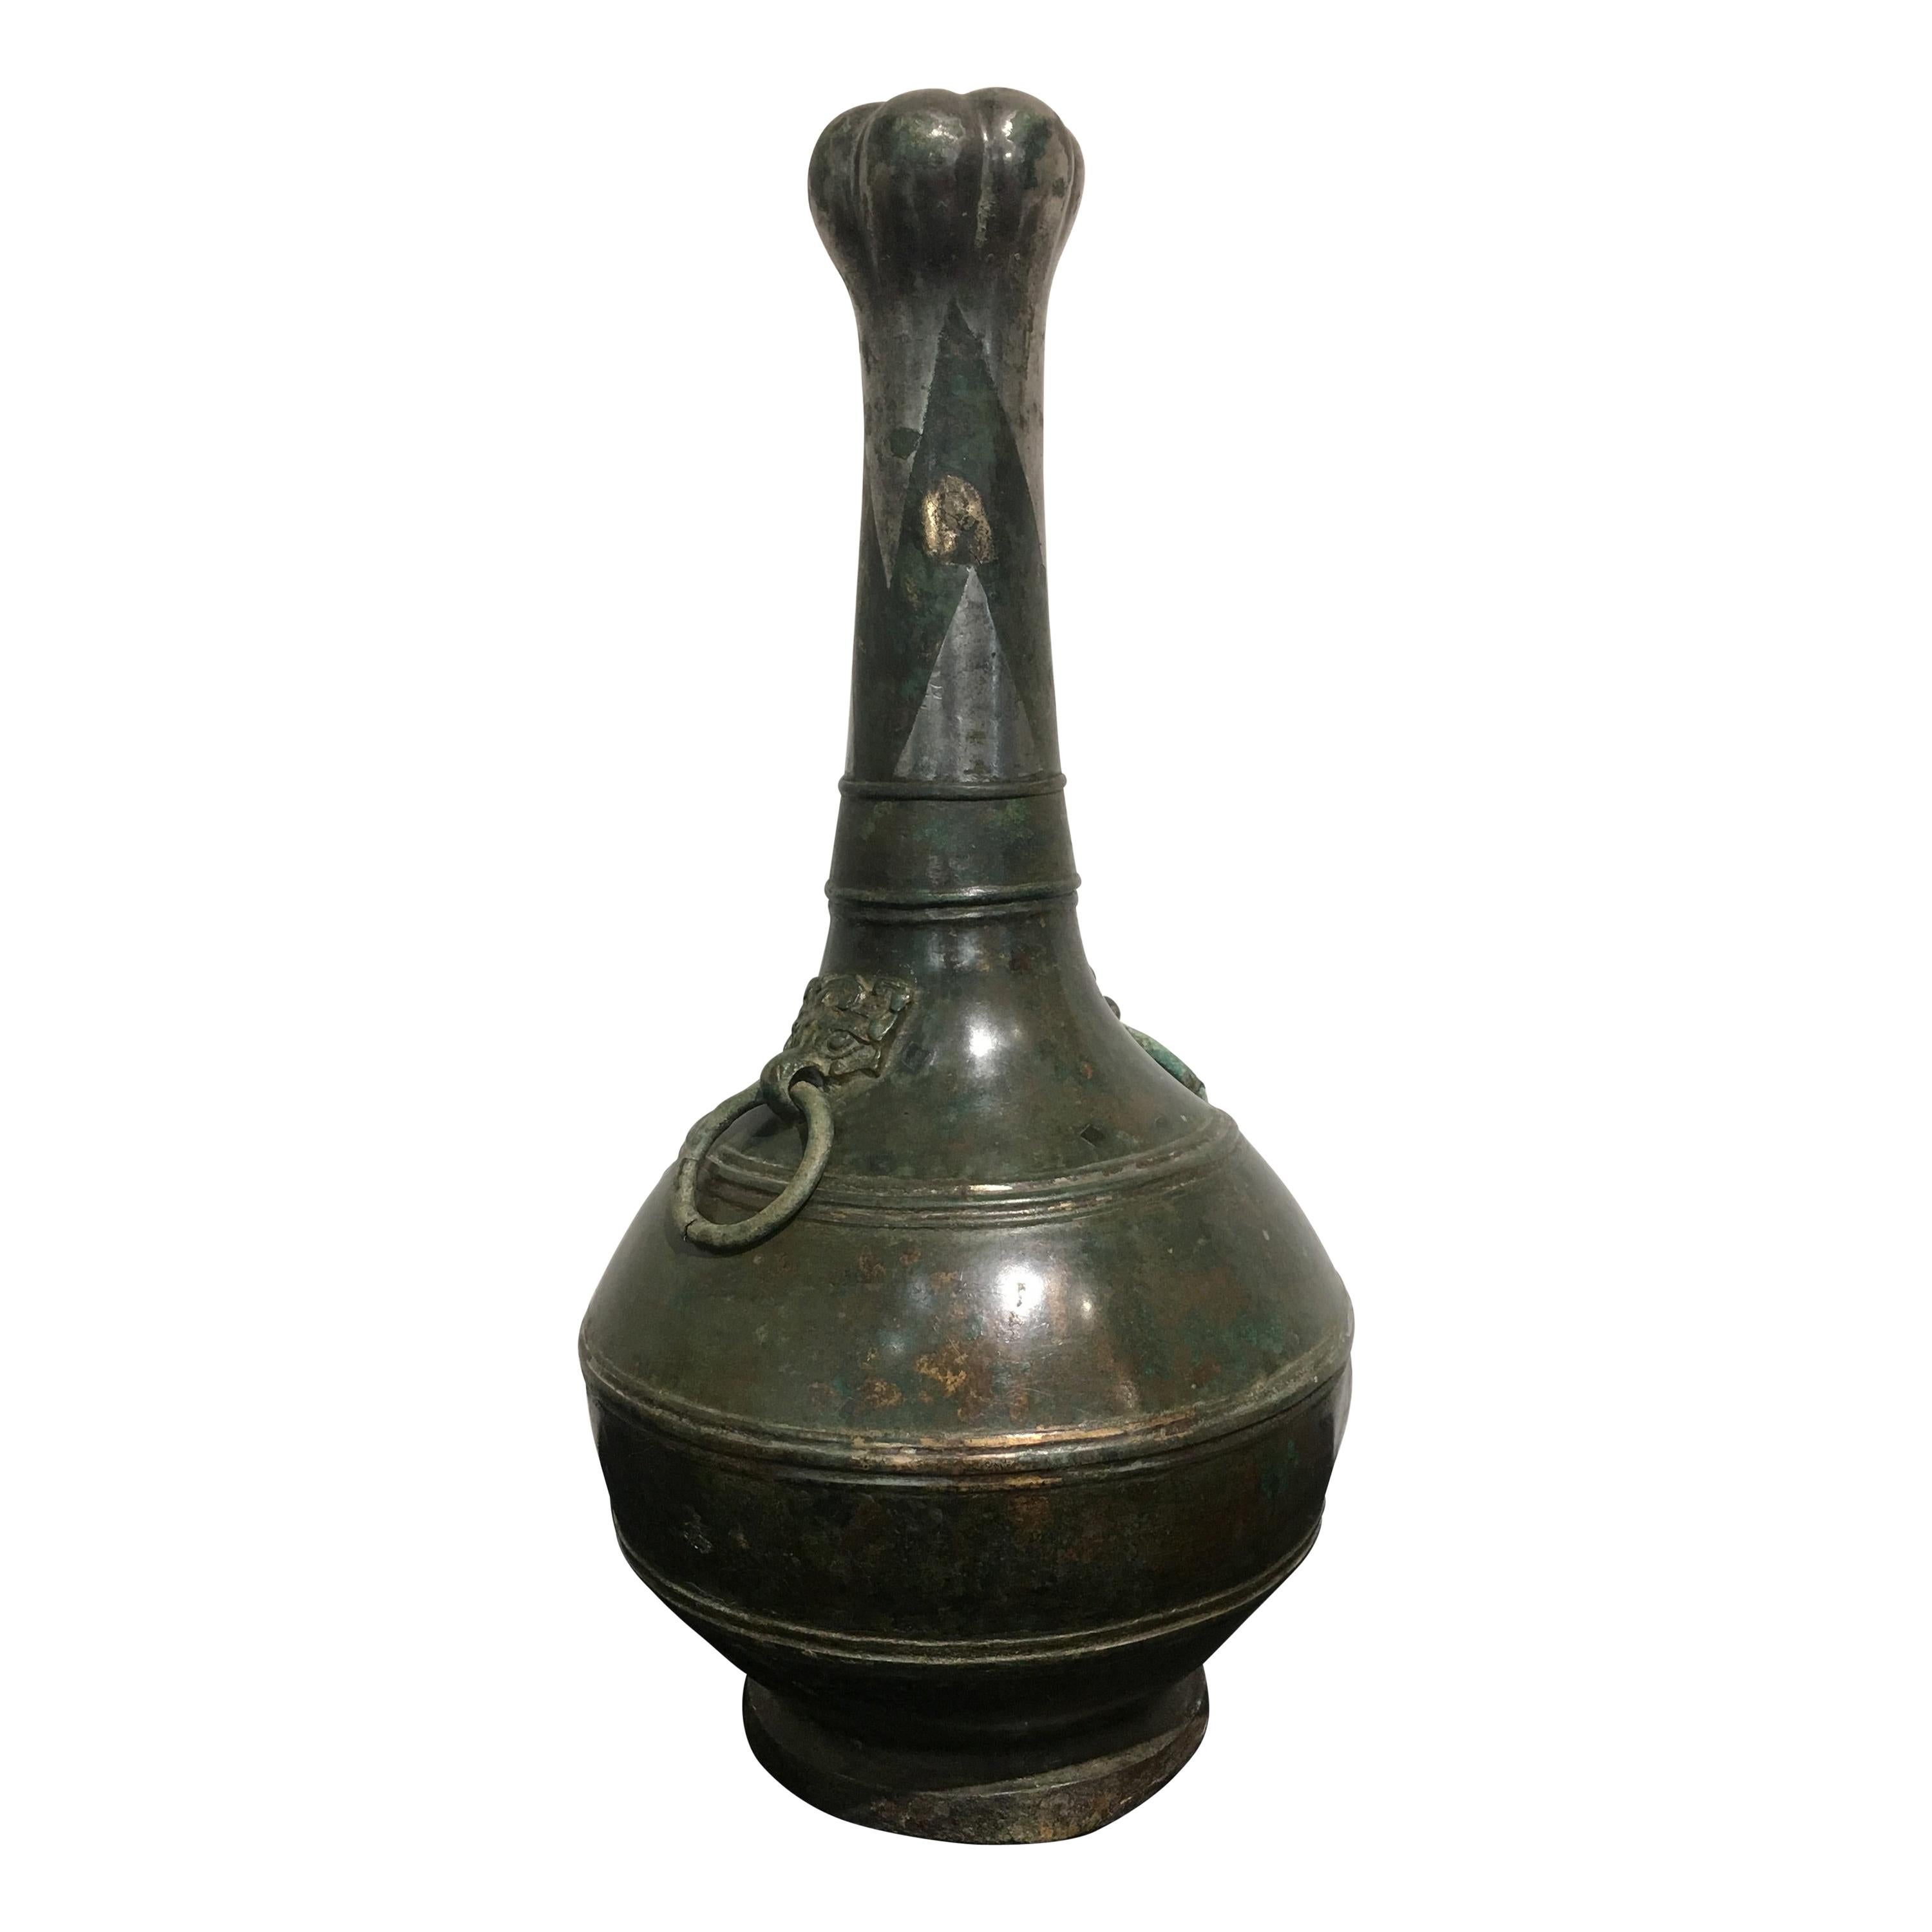 Chinese Han Dynasty Silver-Decorated Garlic Head Bronze Hu Vase, 3rd Century BC